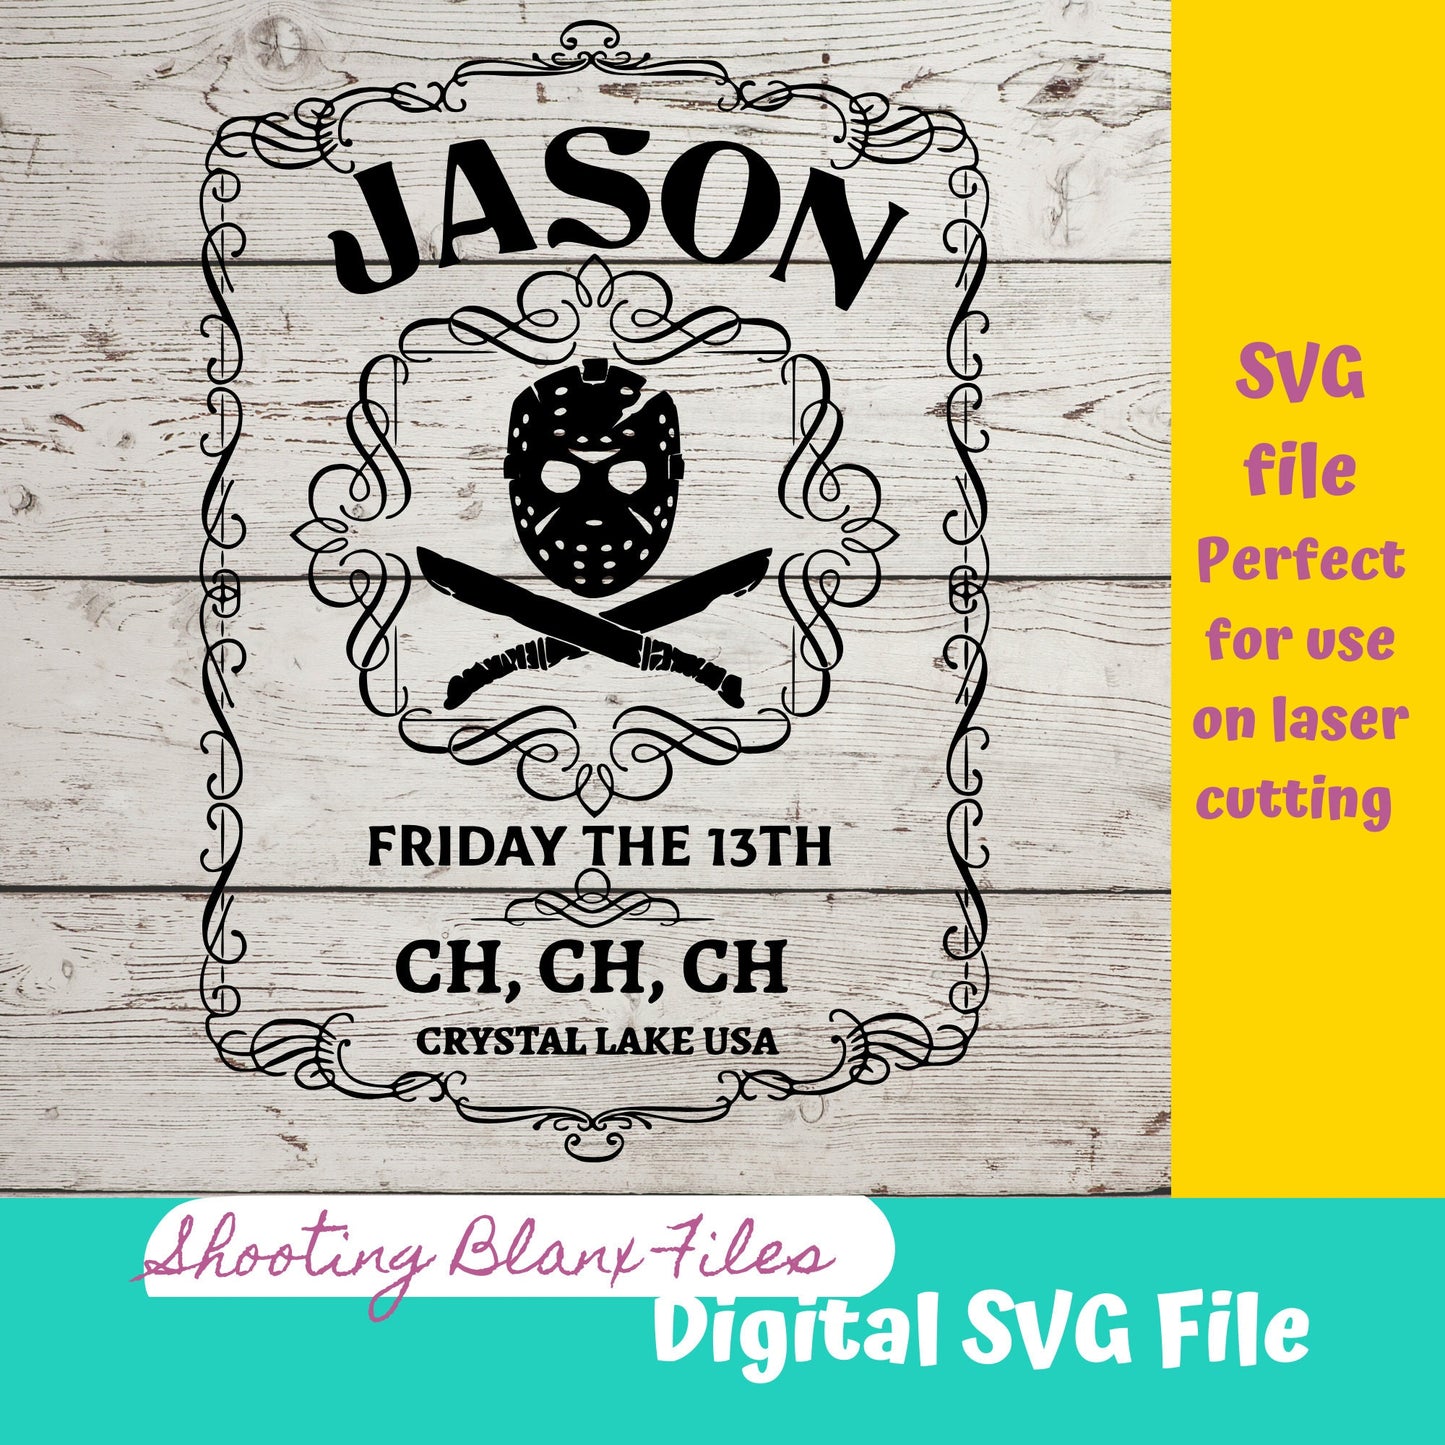 Horror Whiskey Flask Labels  SVG Files | Halloween whisky | Glowforge Halloween Cut File | Digital File, Jason